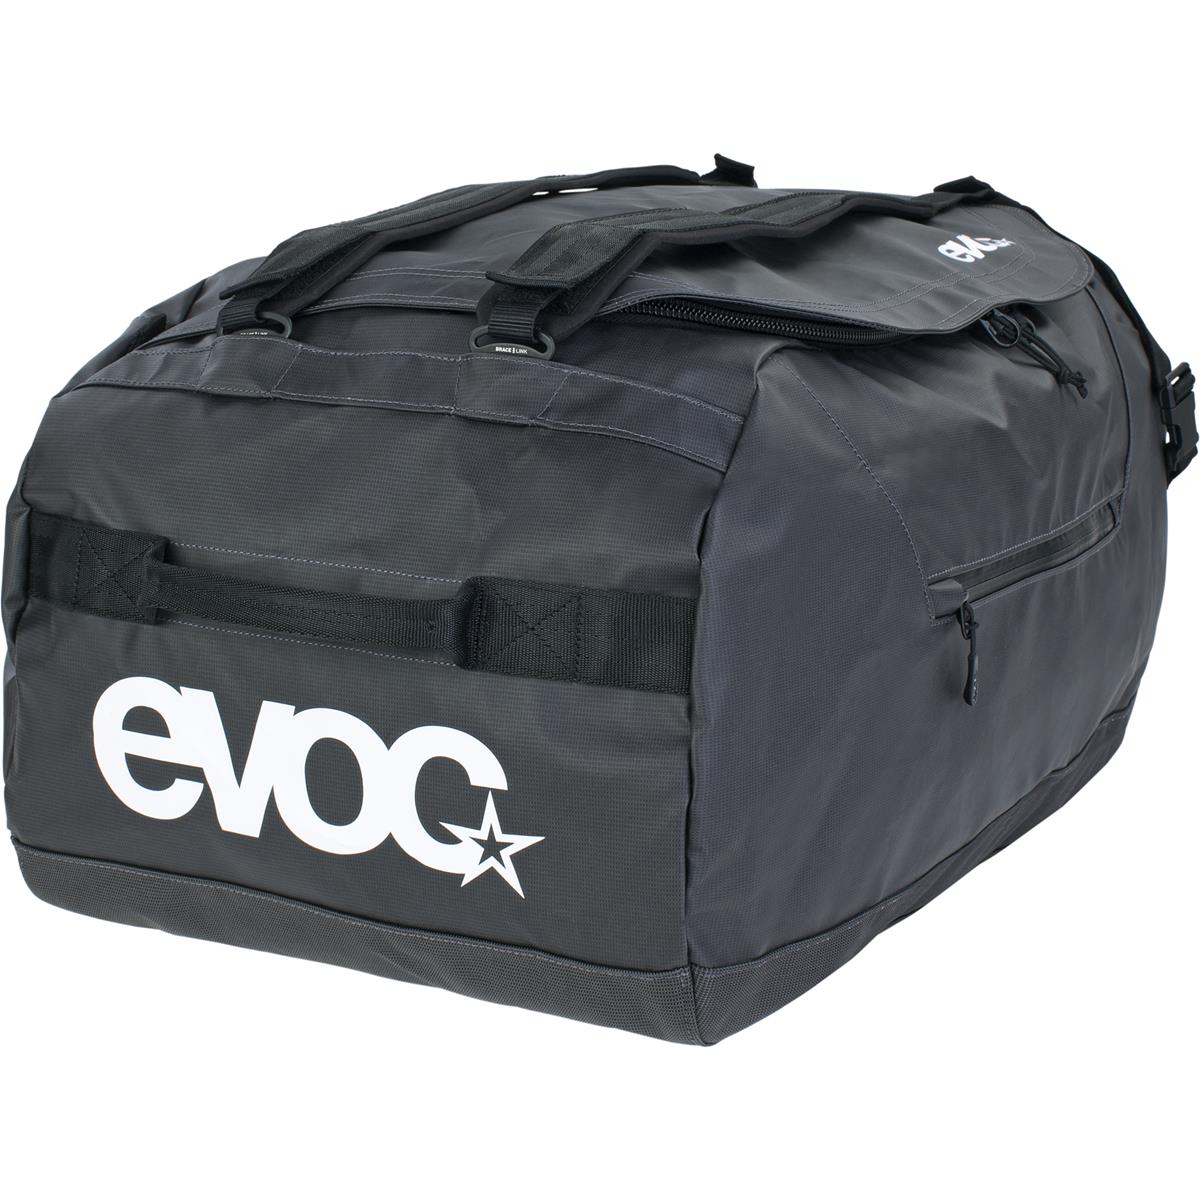 Evoc Sac de sport Duffle Bag 60 Carbon Gris/Noir